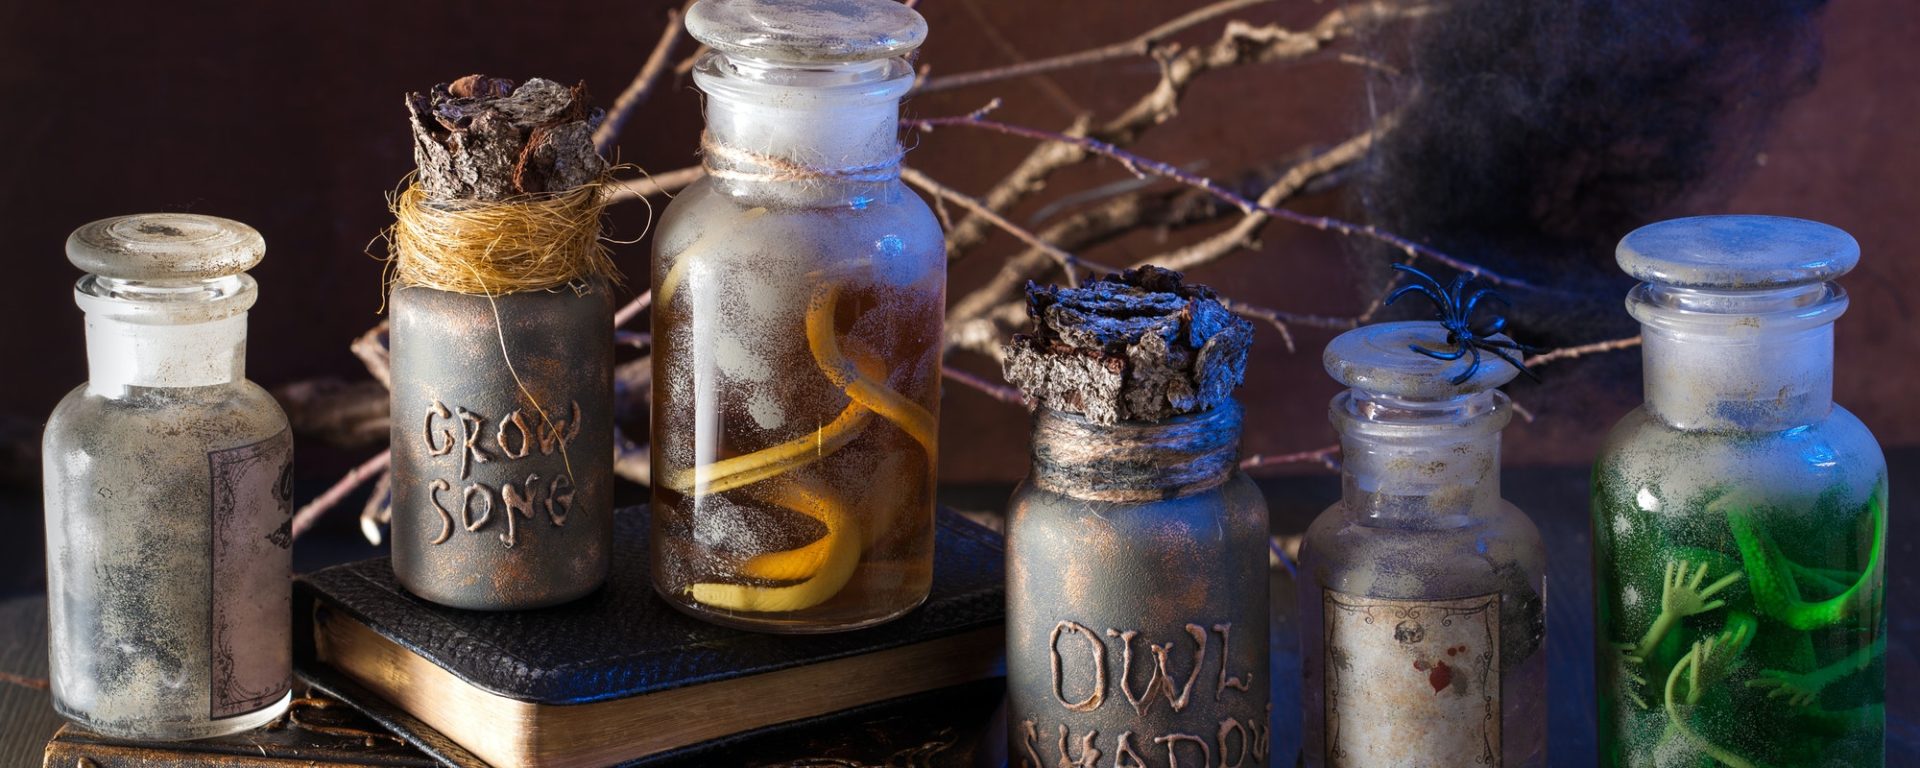 Apothecary jars and magic potions